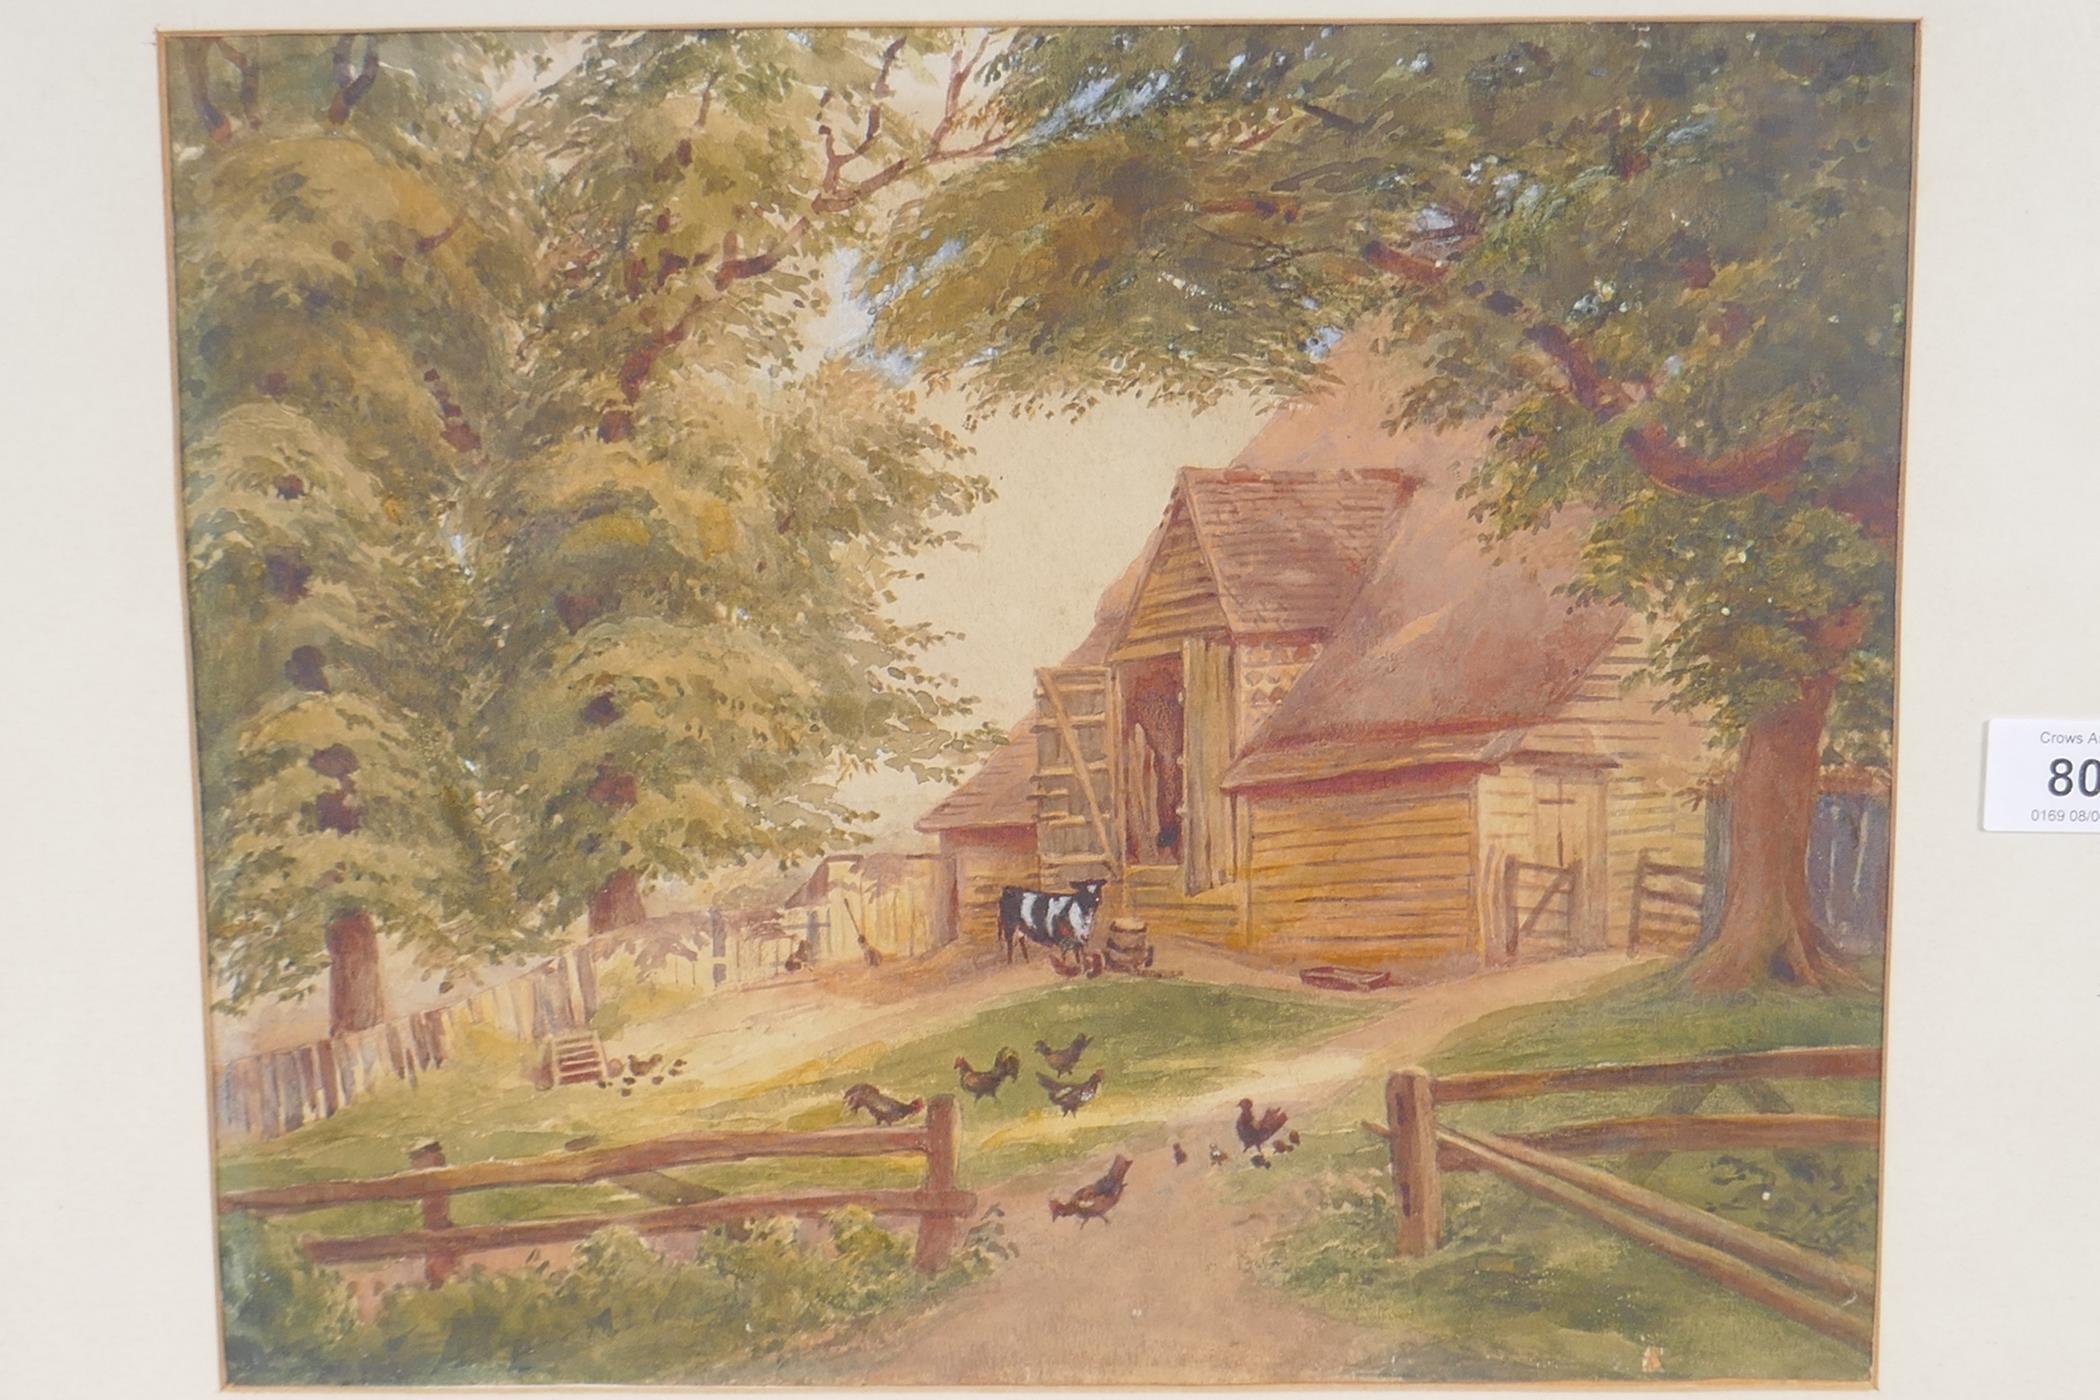 A farmyard scene with children and livestock, watercolour, 31cm x 26cm - Image 2 of 2